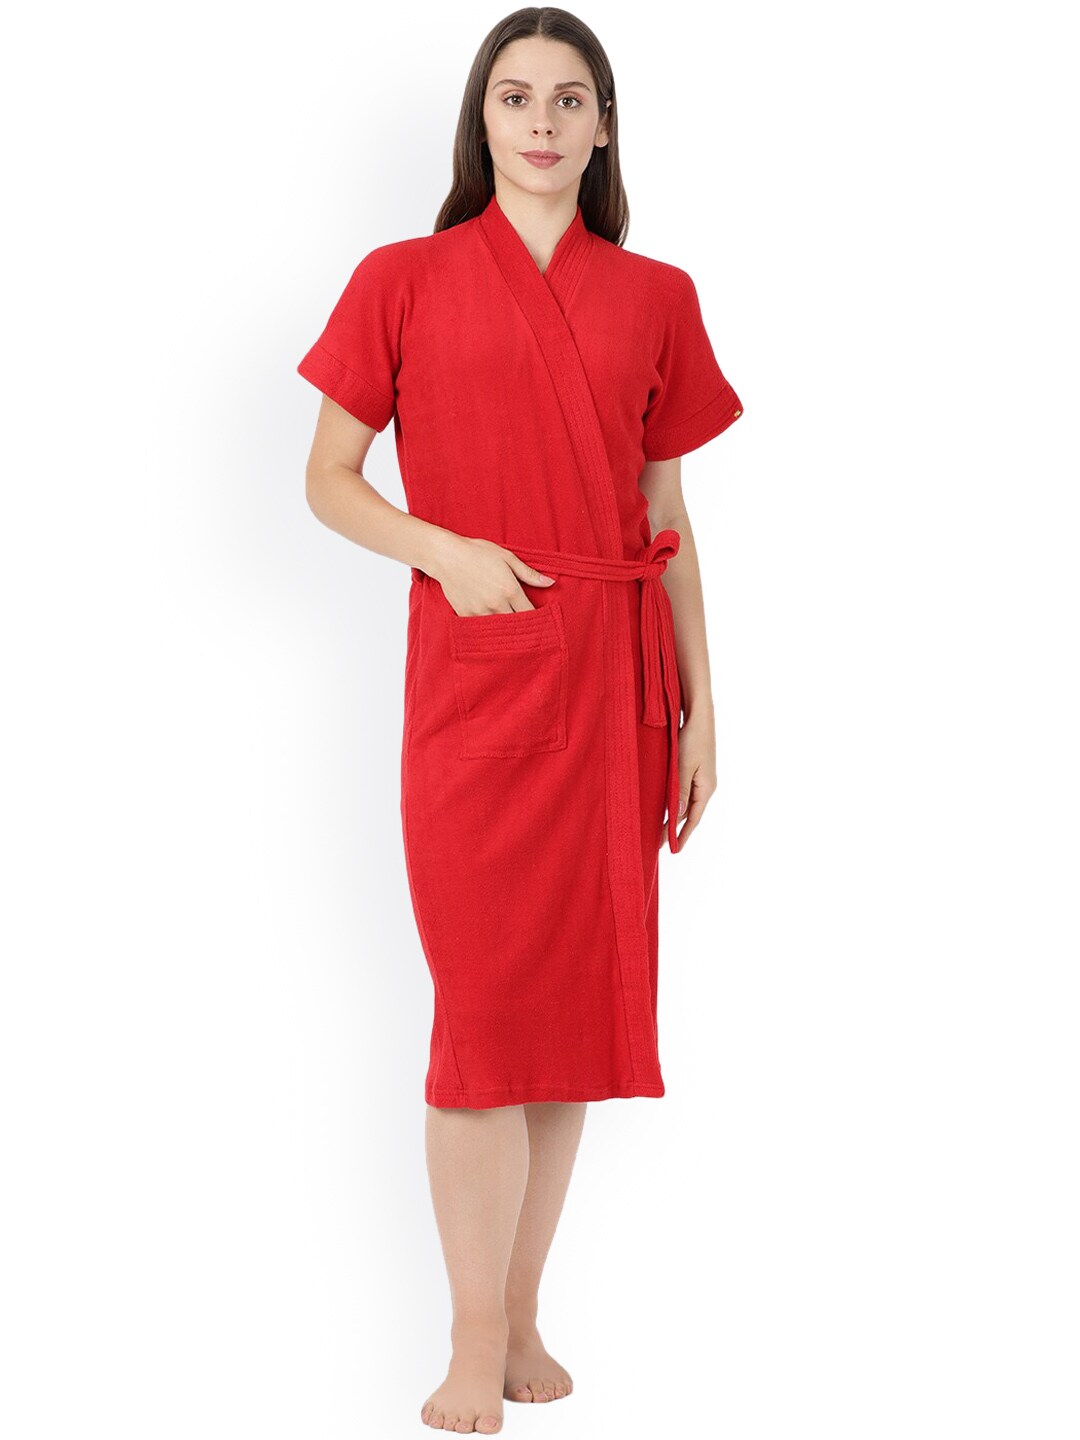 GOLDSTROMS Women Red Solid Bathrobe Price in India